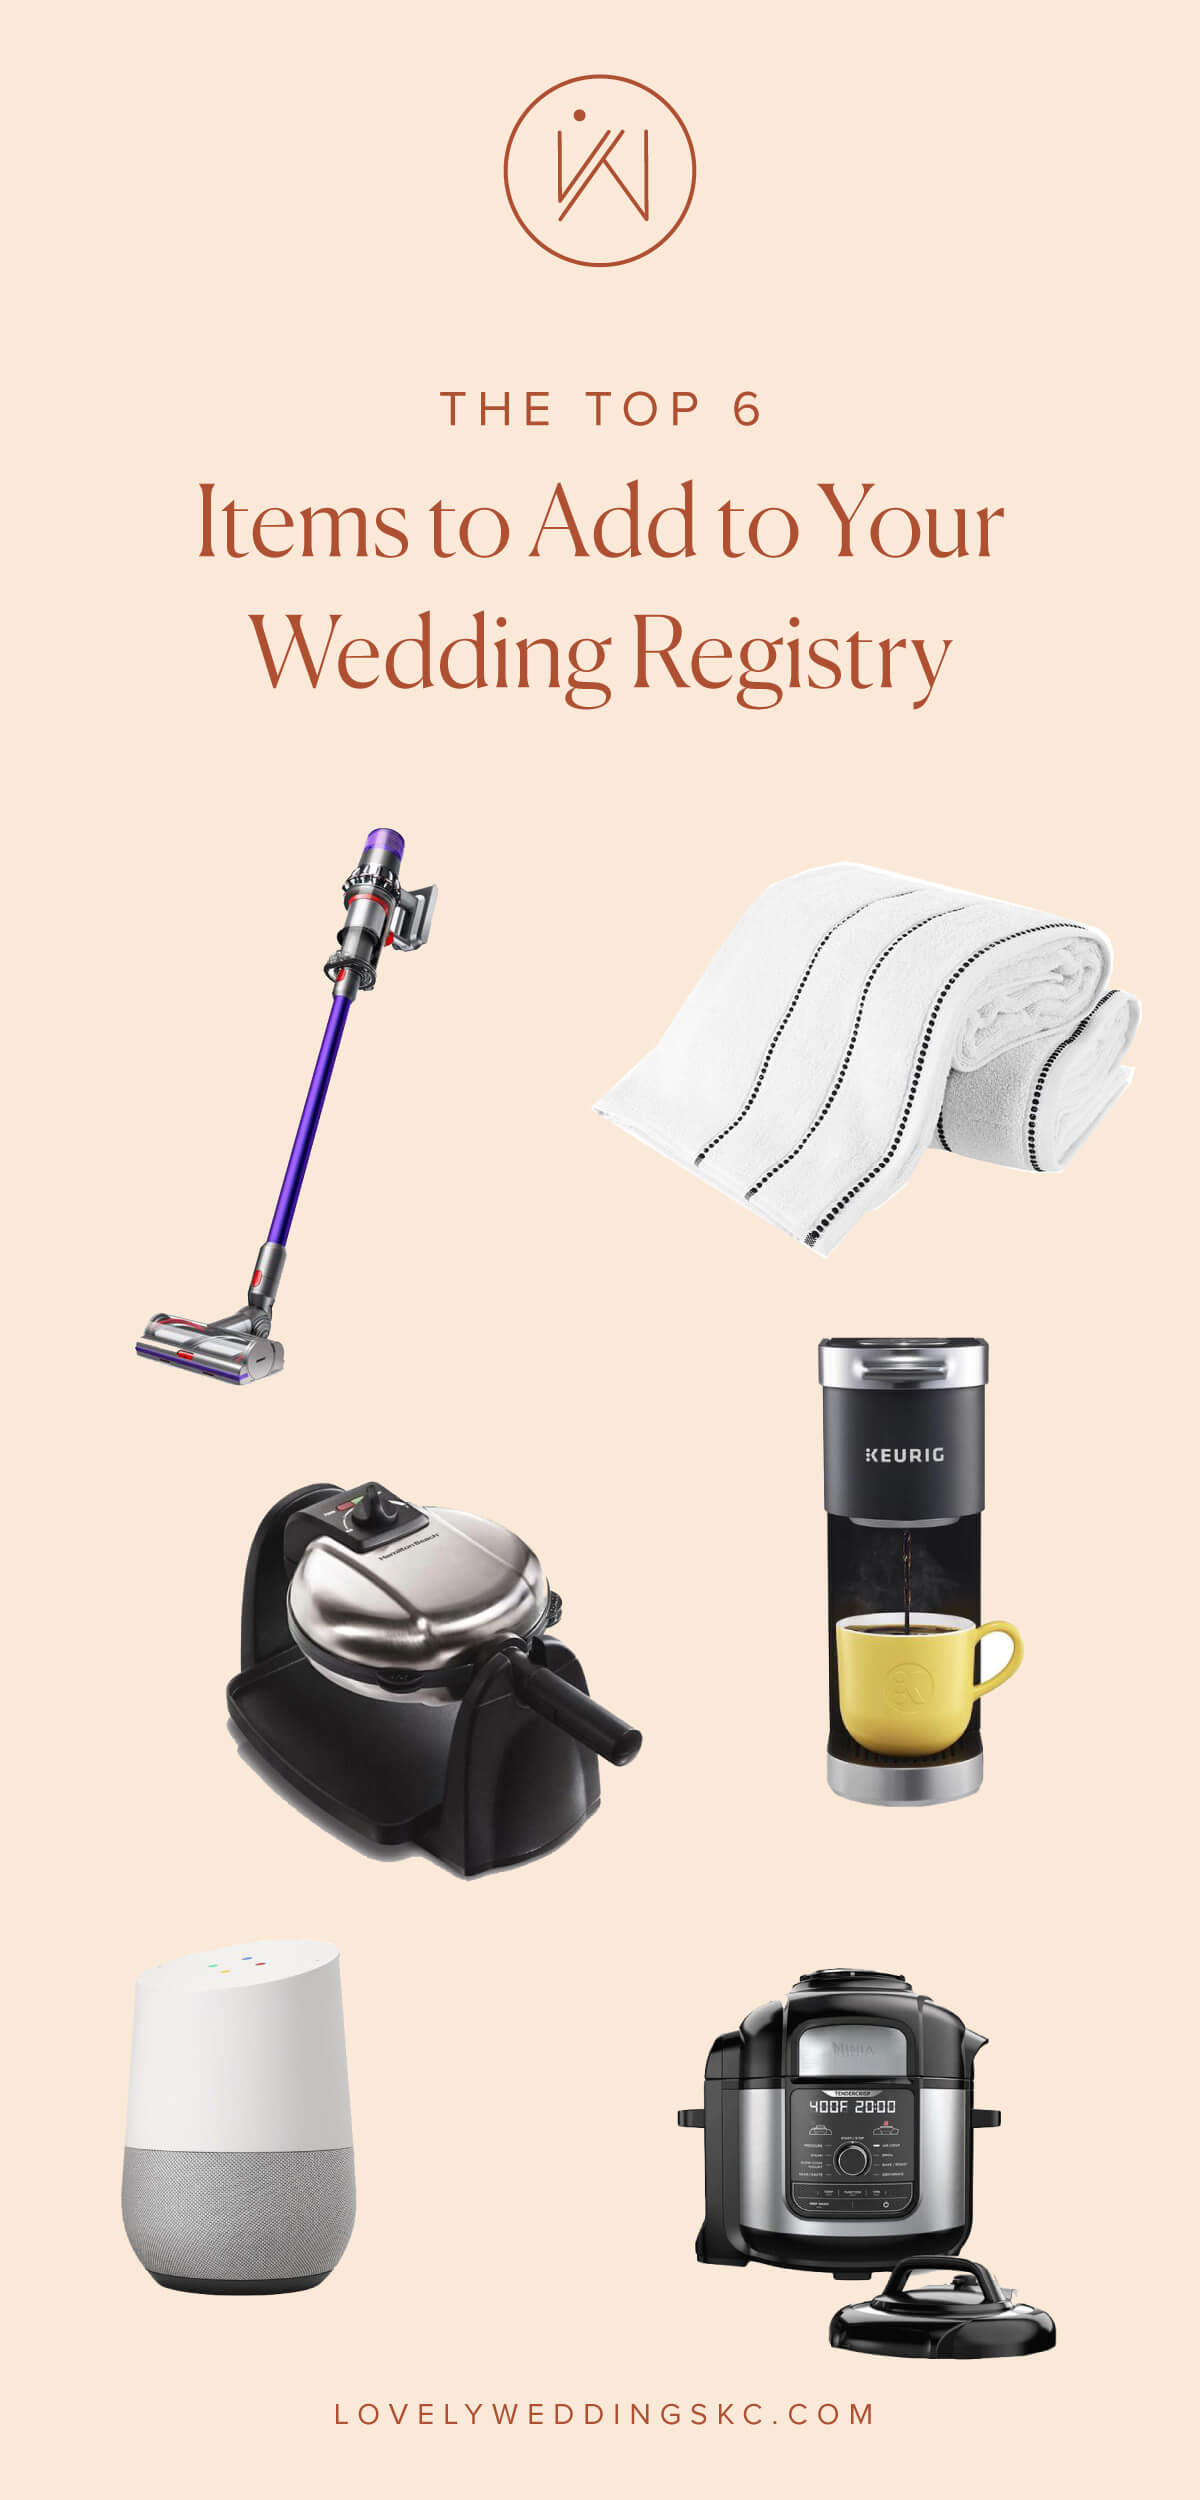 https://lovelyweddingskc.com/wp-content/uploads/sites/27677/2020/03/Top-5-Wedding-Registry-Items-12.jpg